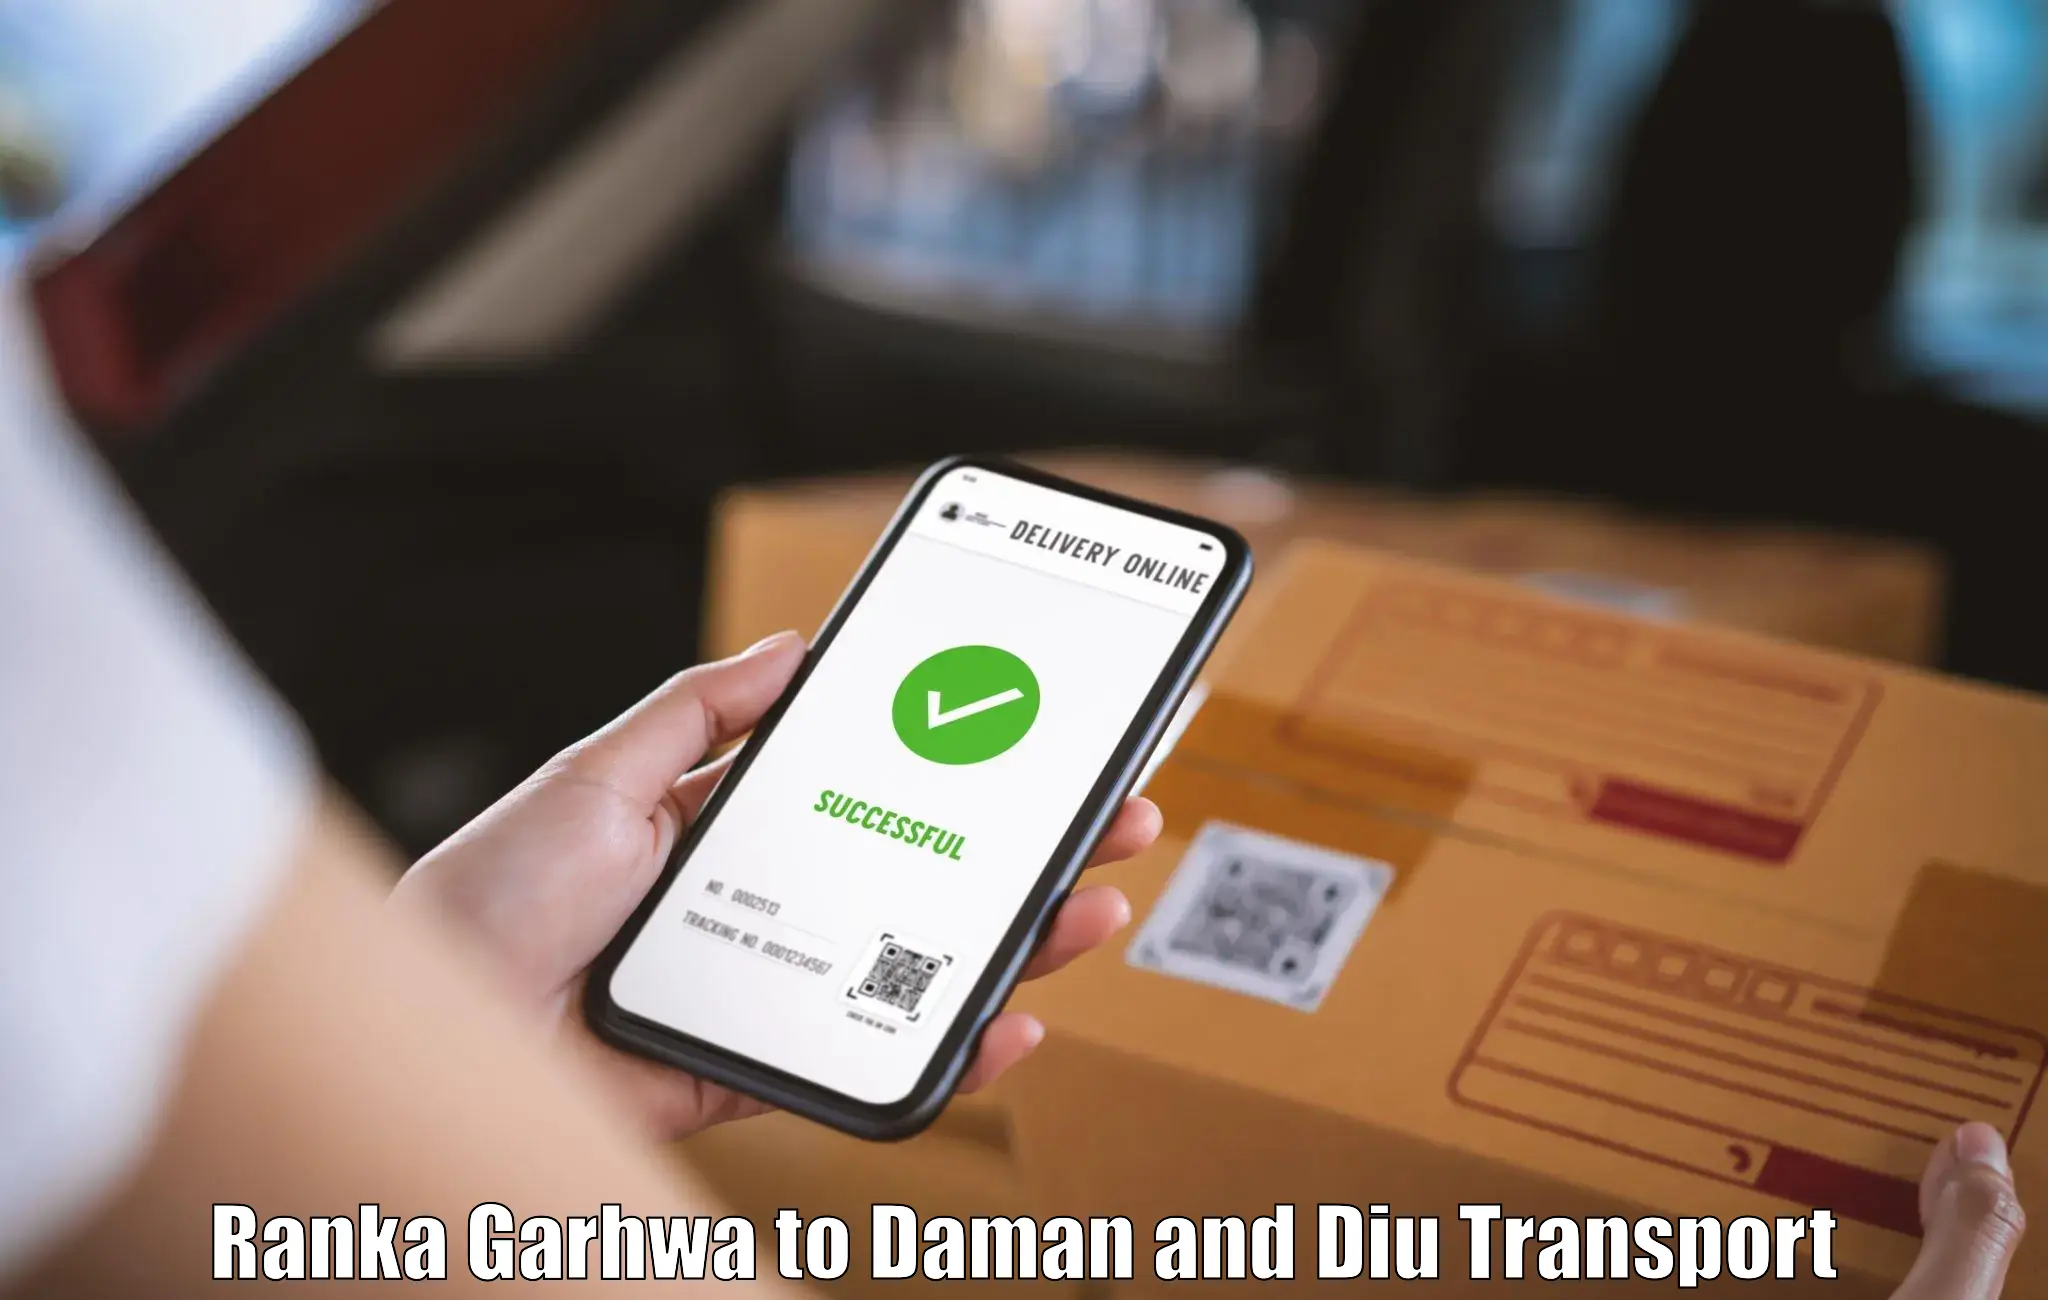 Daily transport service Ranka Garhwa to Diu